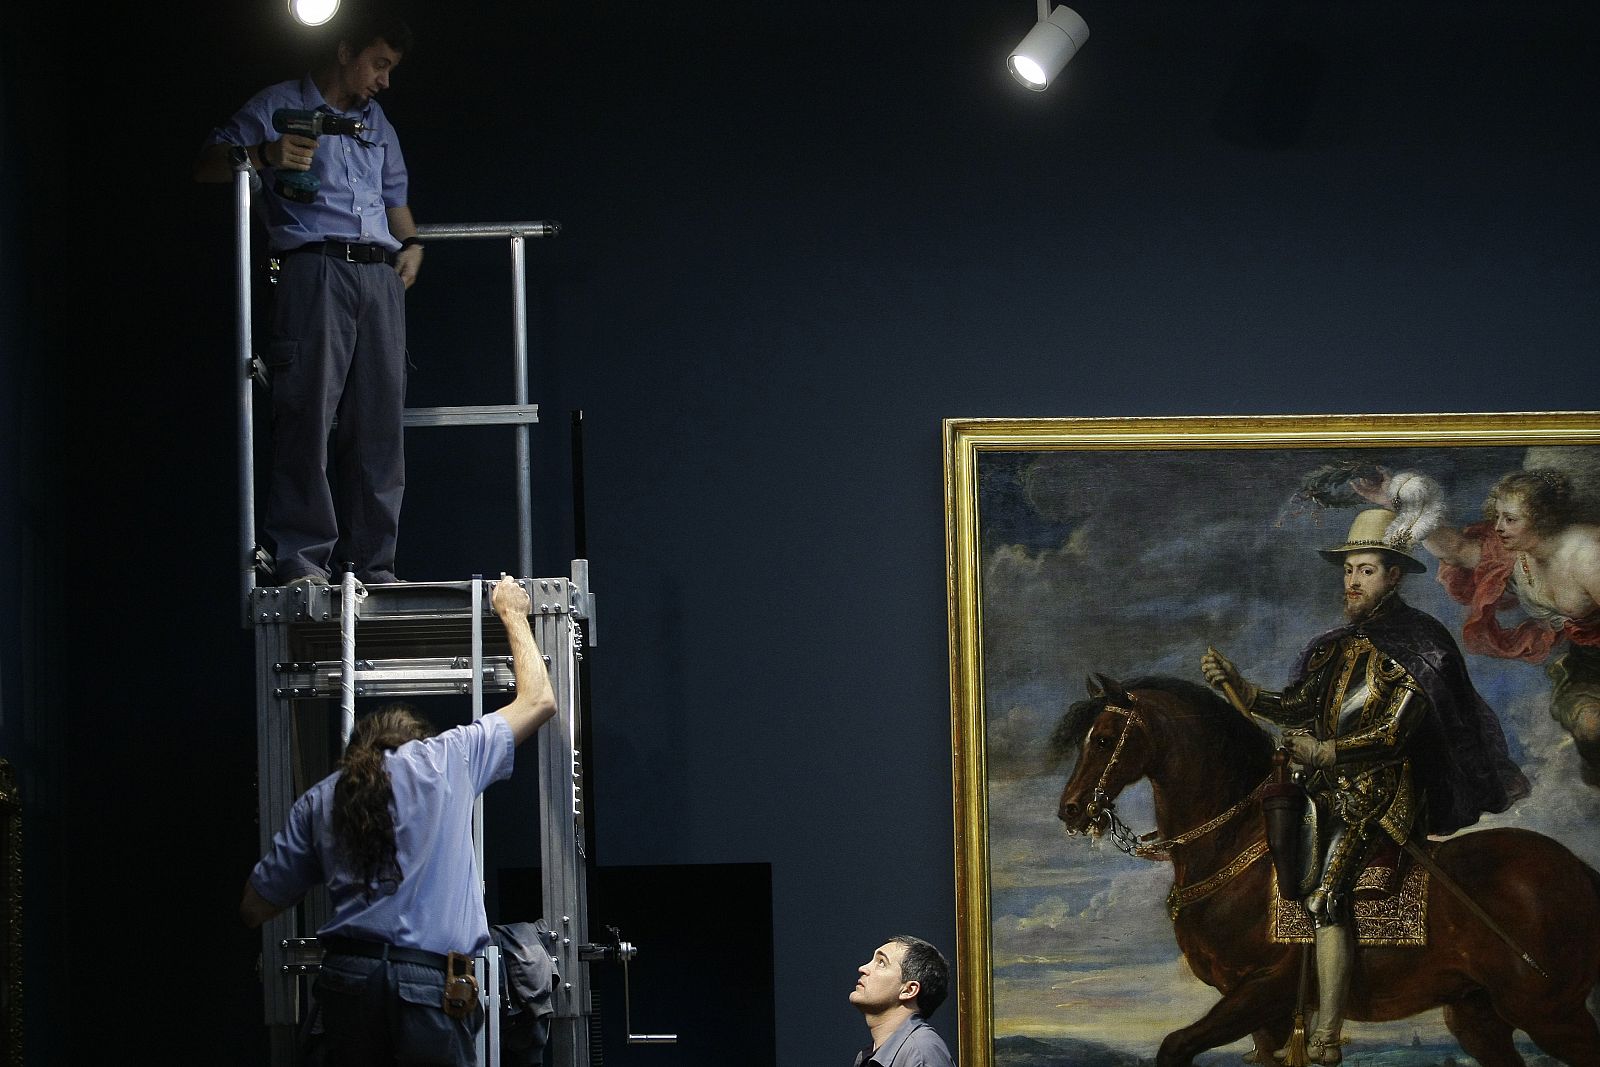 Museum workers are seen next to Rubens' painting "Philip II on Horseback" at Madrid's Prado Museum